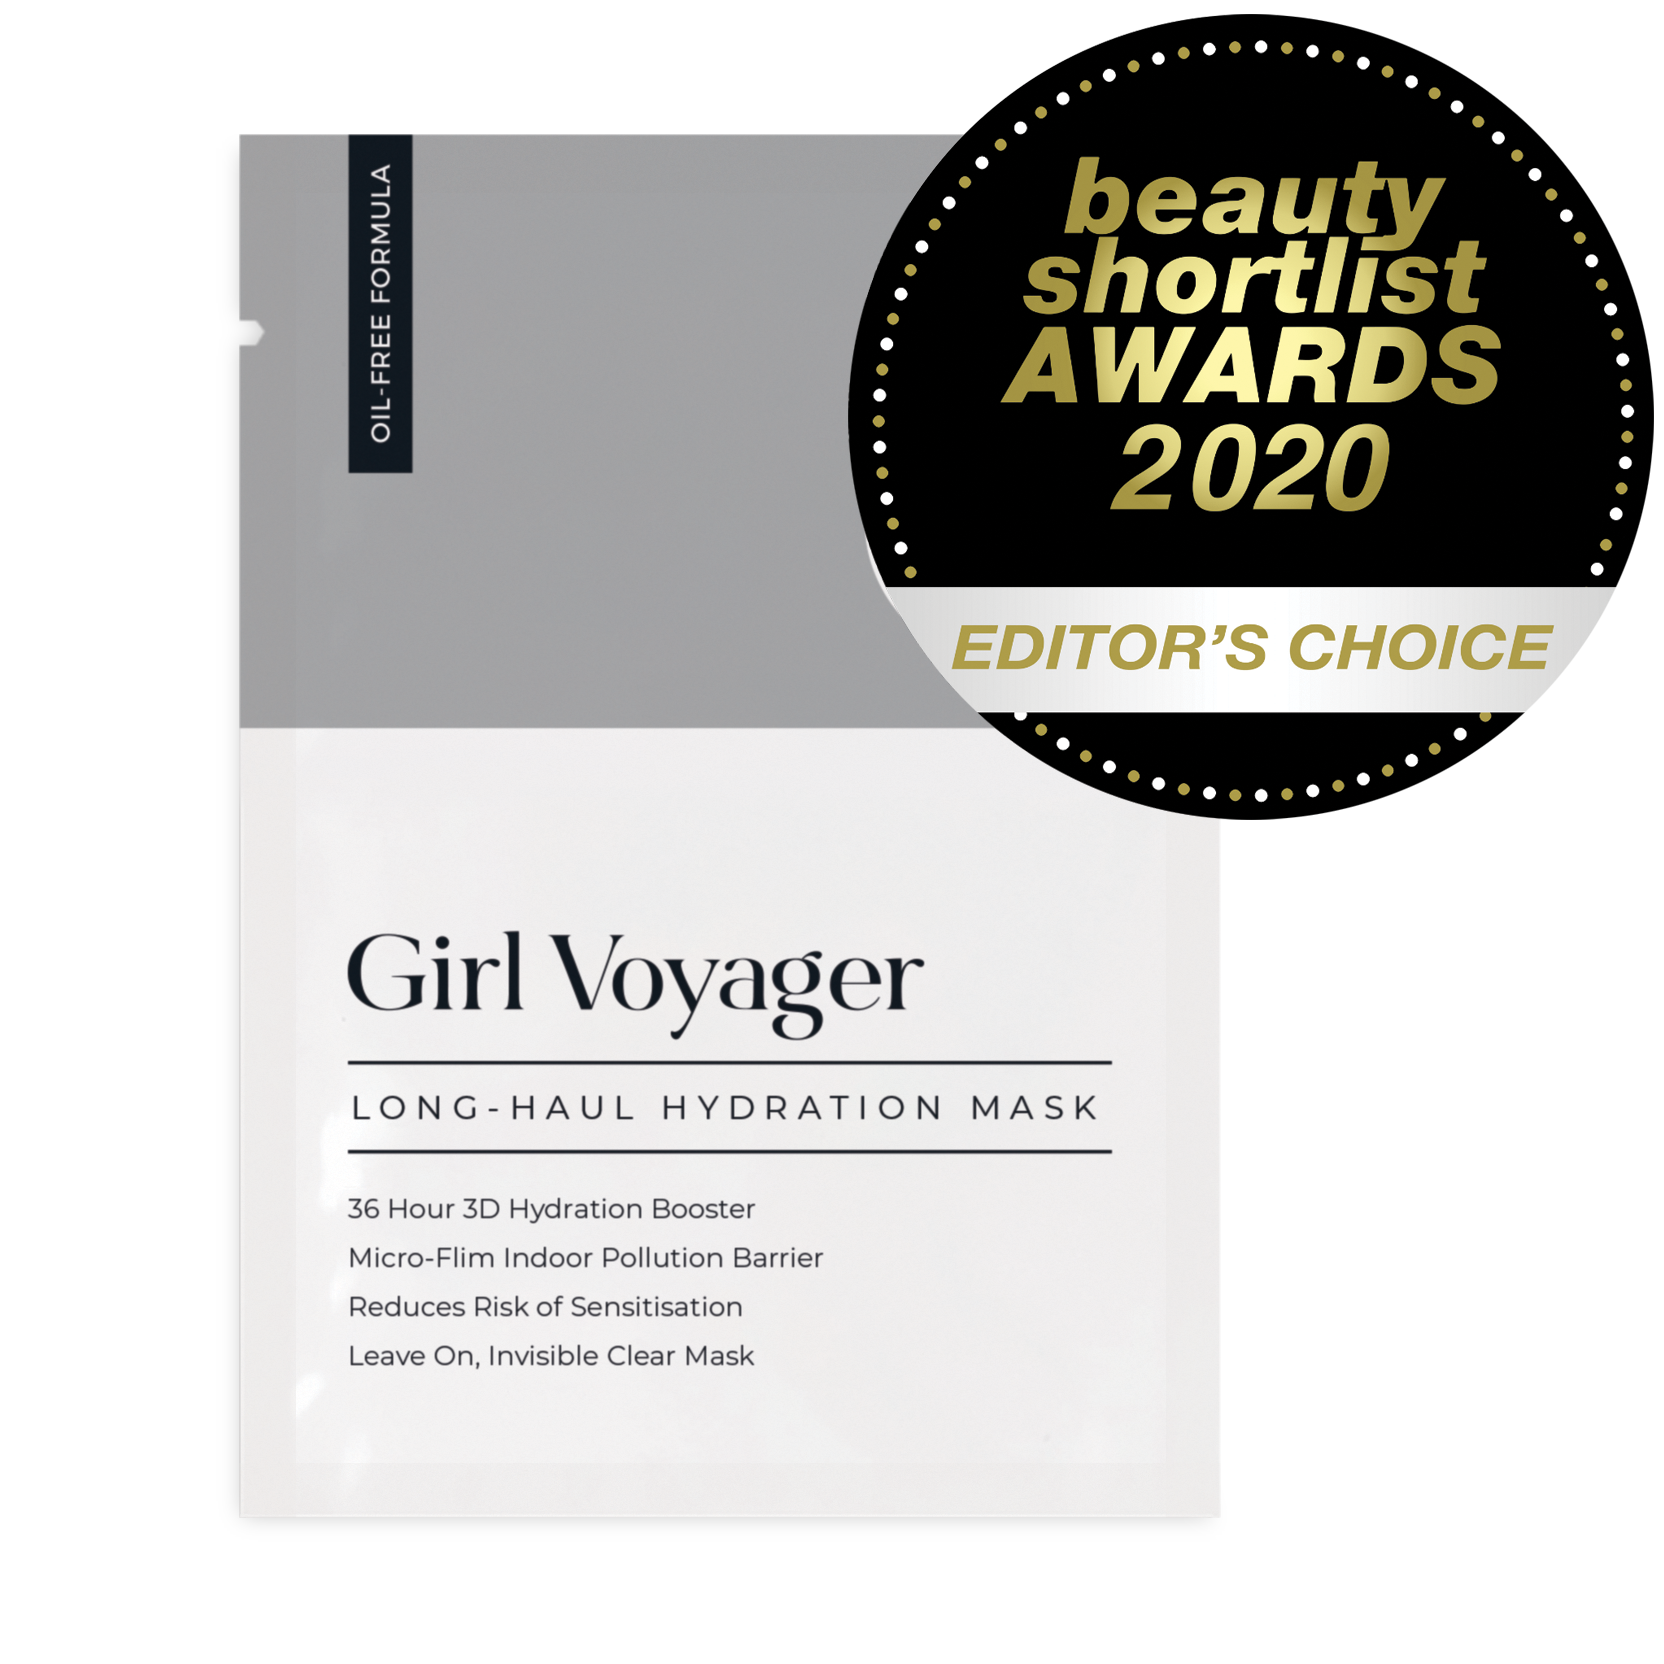 Girl Voyager Long Haul Hydration Mask Editors Choice 2020 UK Beauty Shortlist Awards 2020 OIL FREE